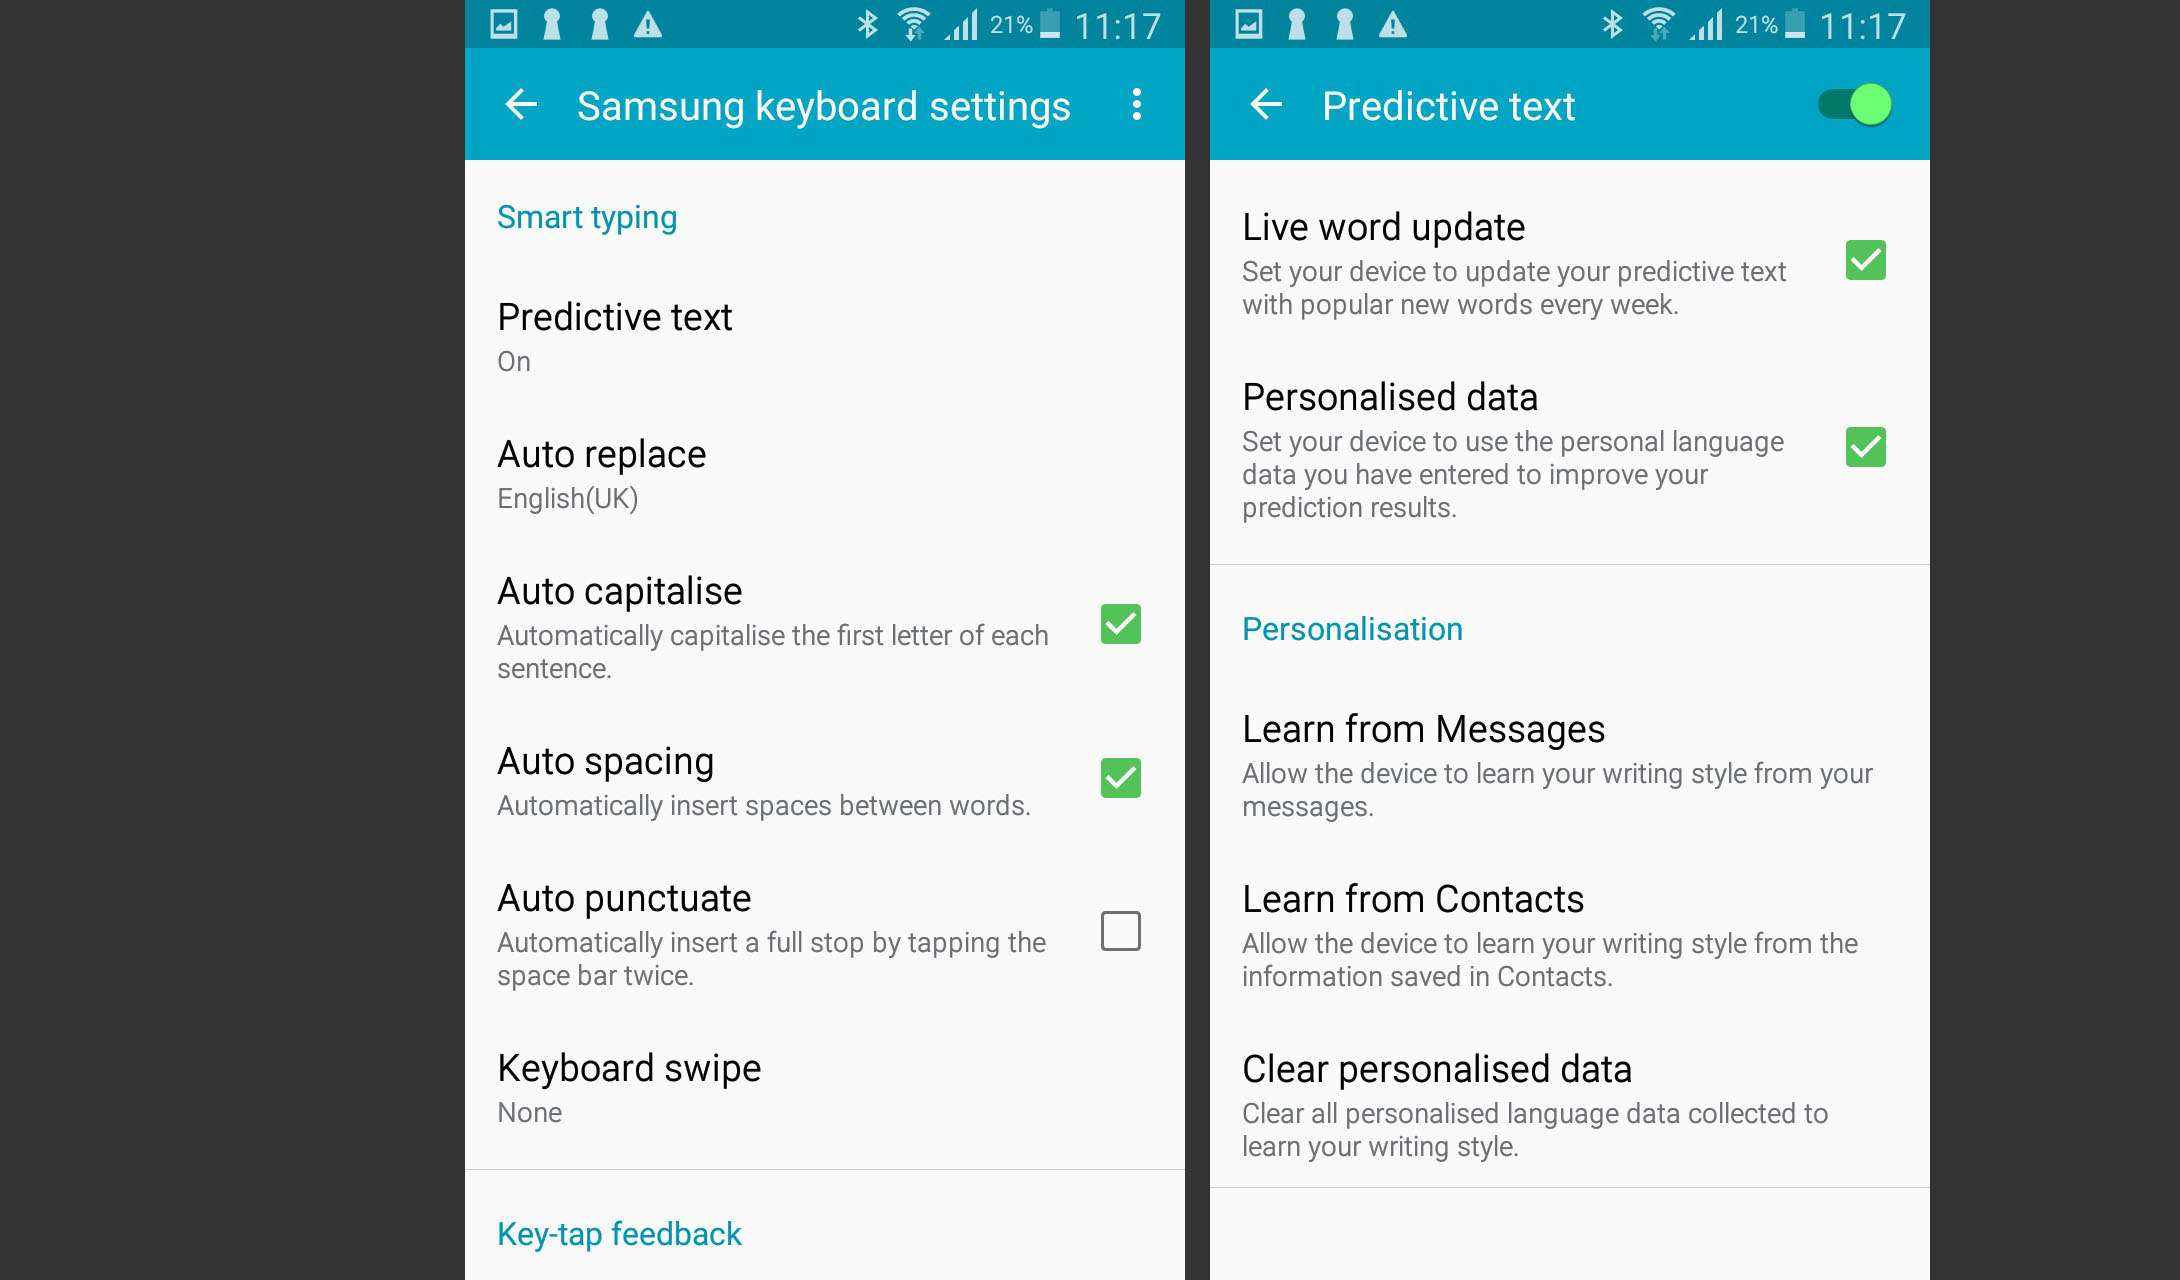 Nastavení klávesnice Samsung a prediktivní nastavení textu